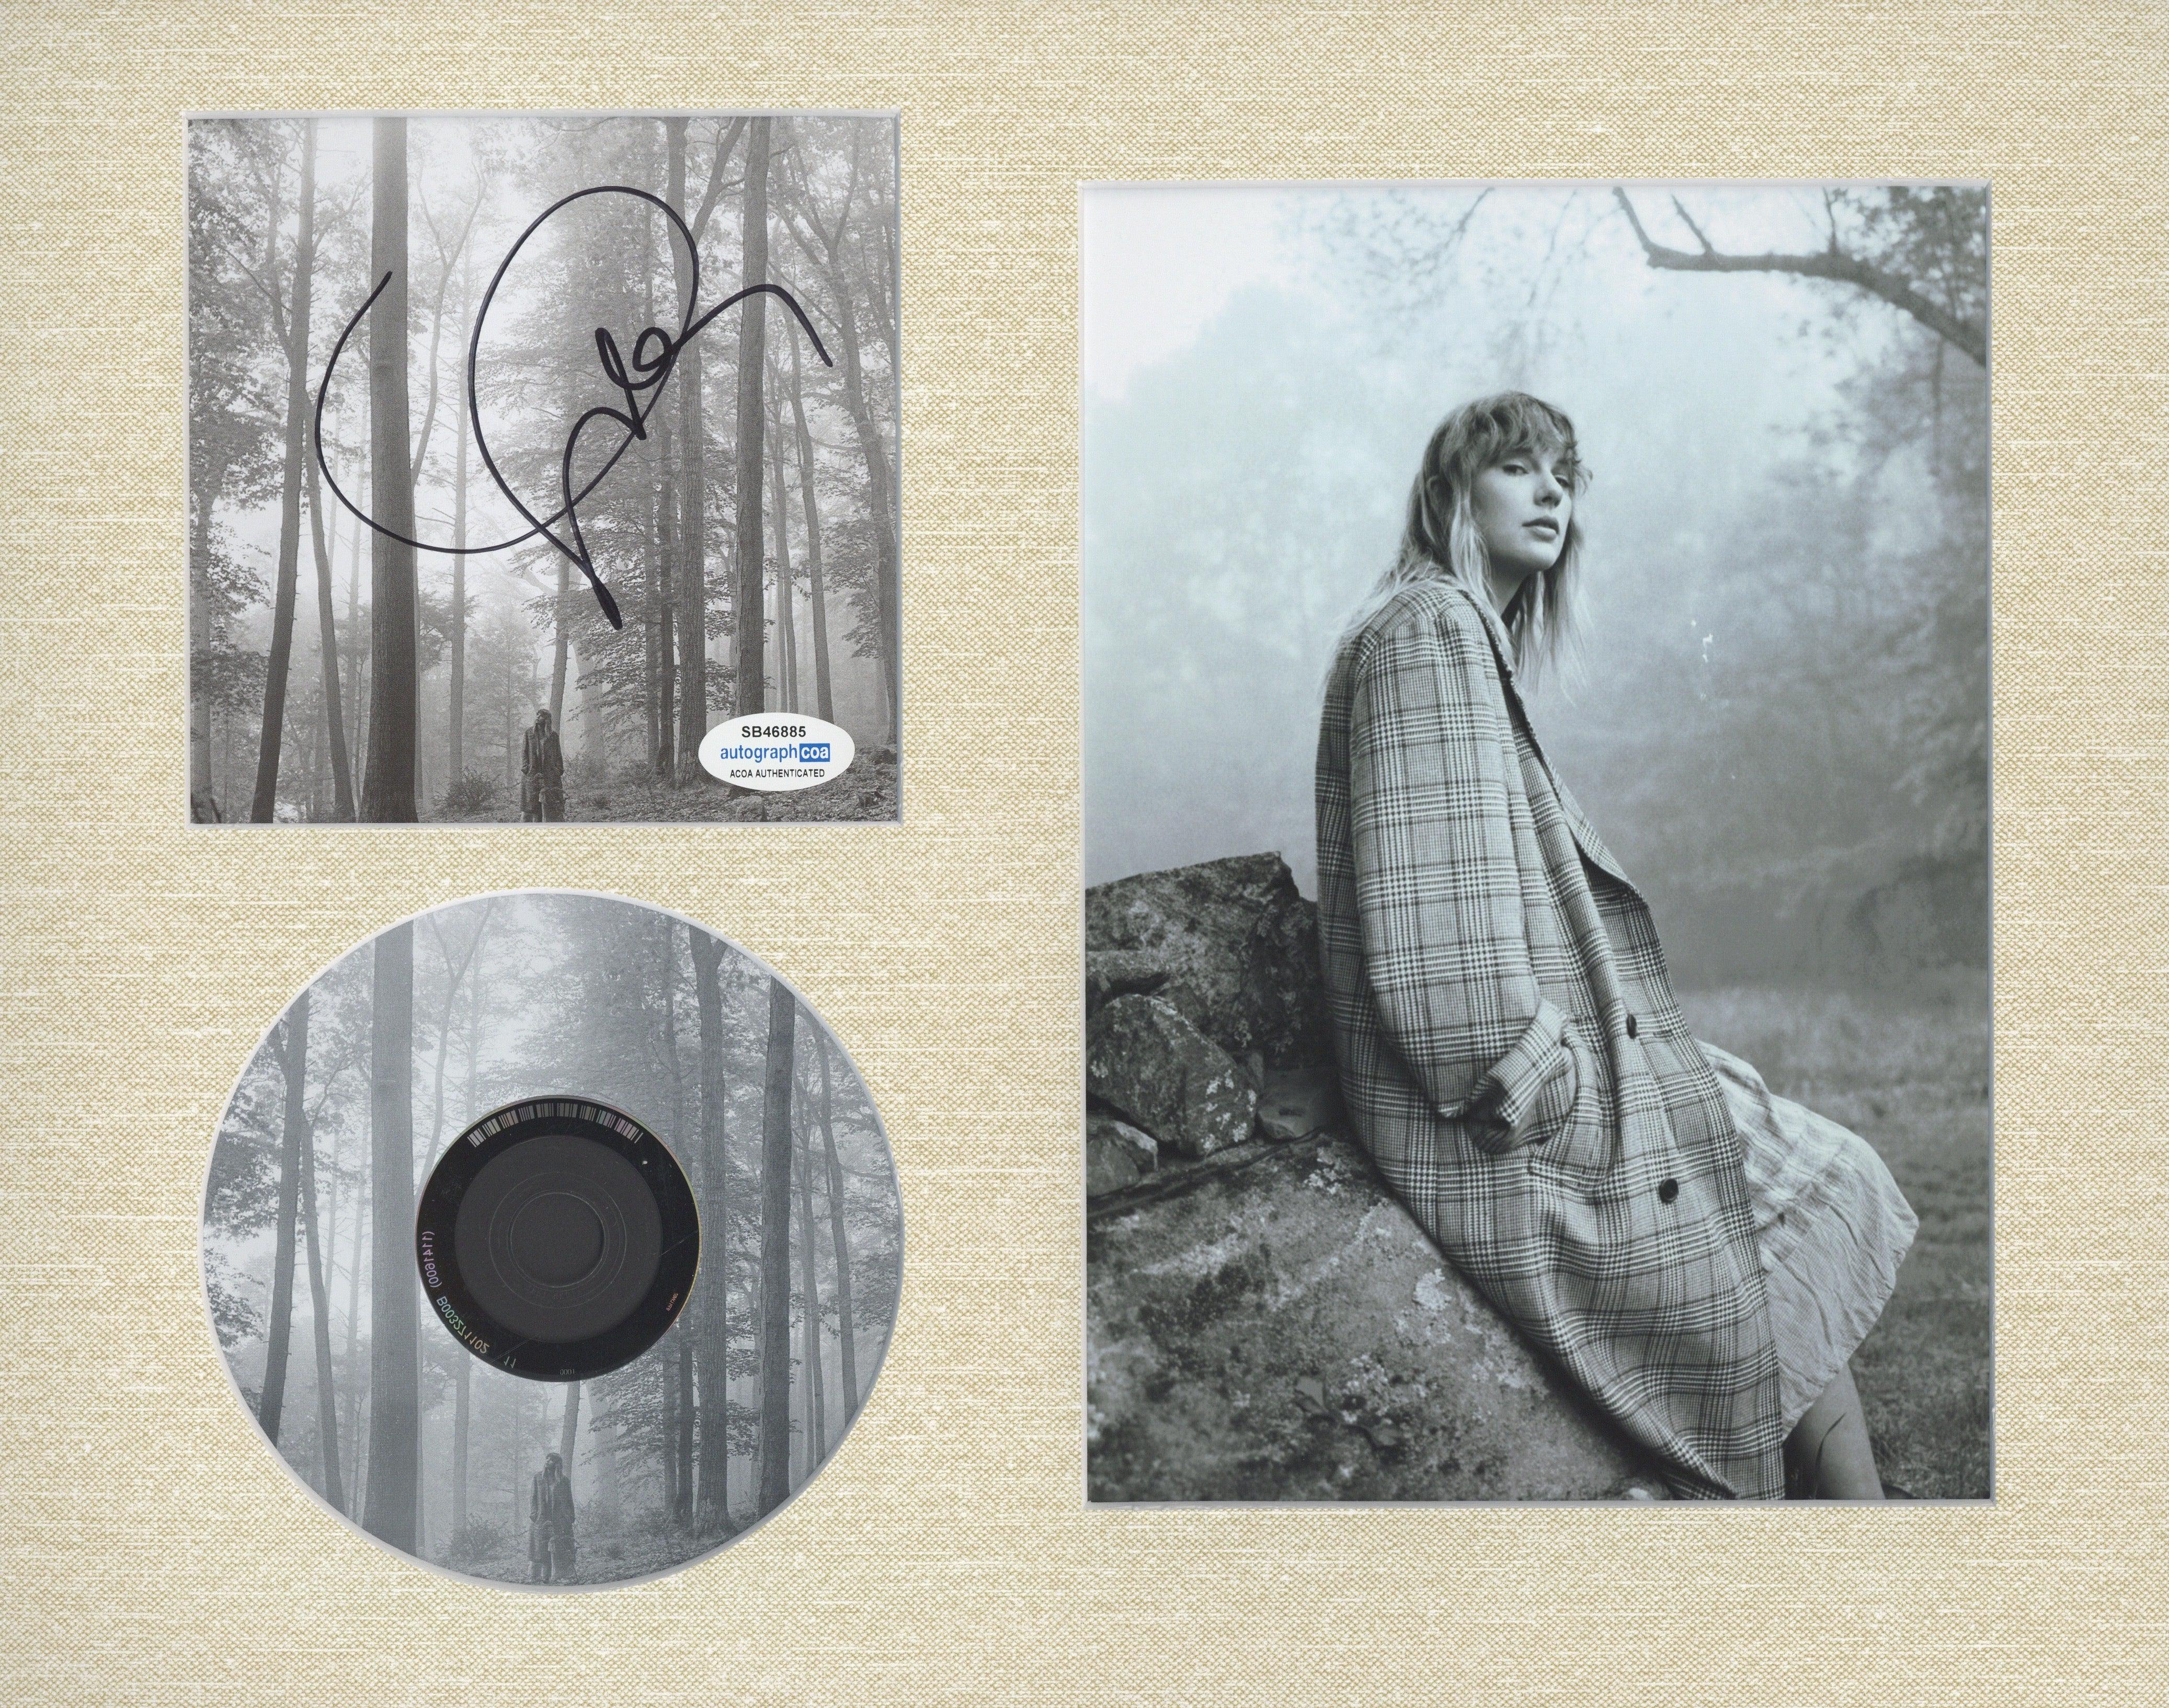 Taylor Swift Signed 11x15 Custom Framed Folklore Album Photo Display (JSA  COA)